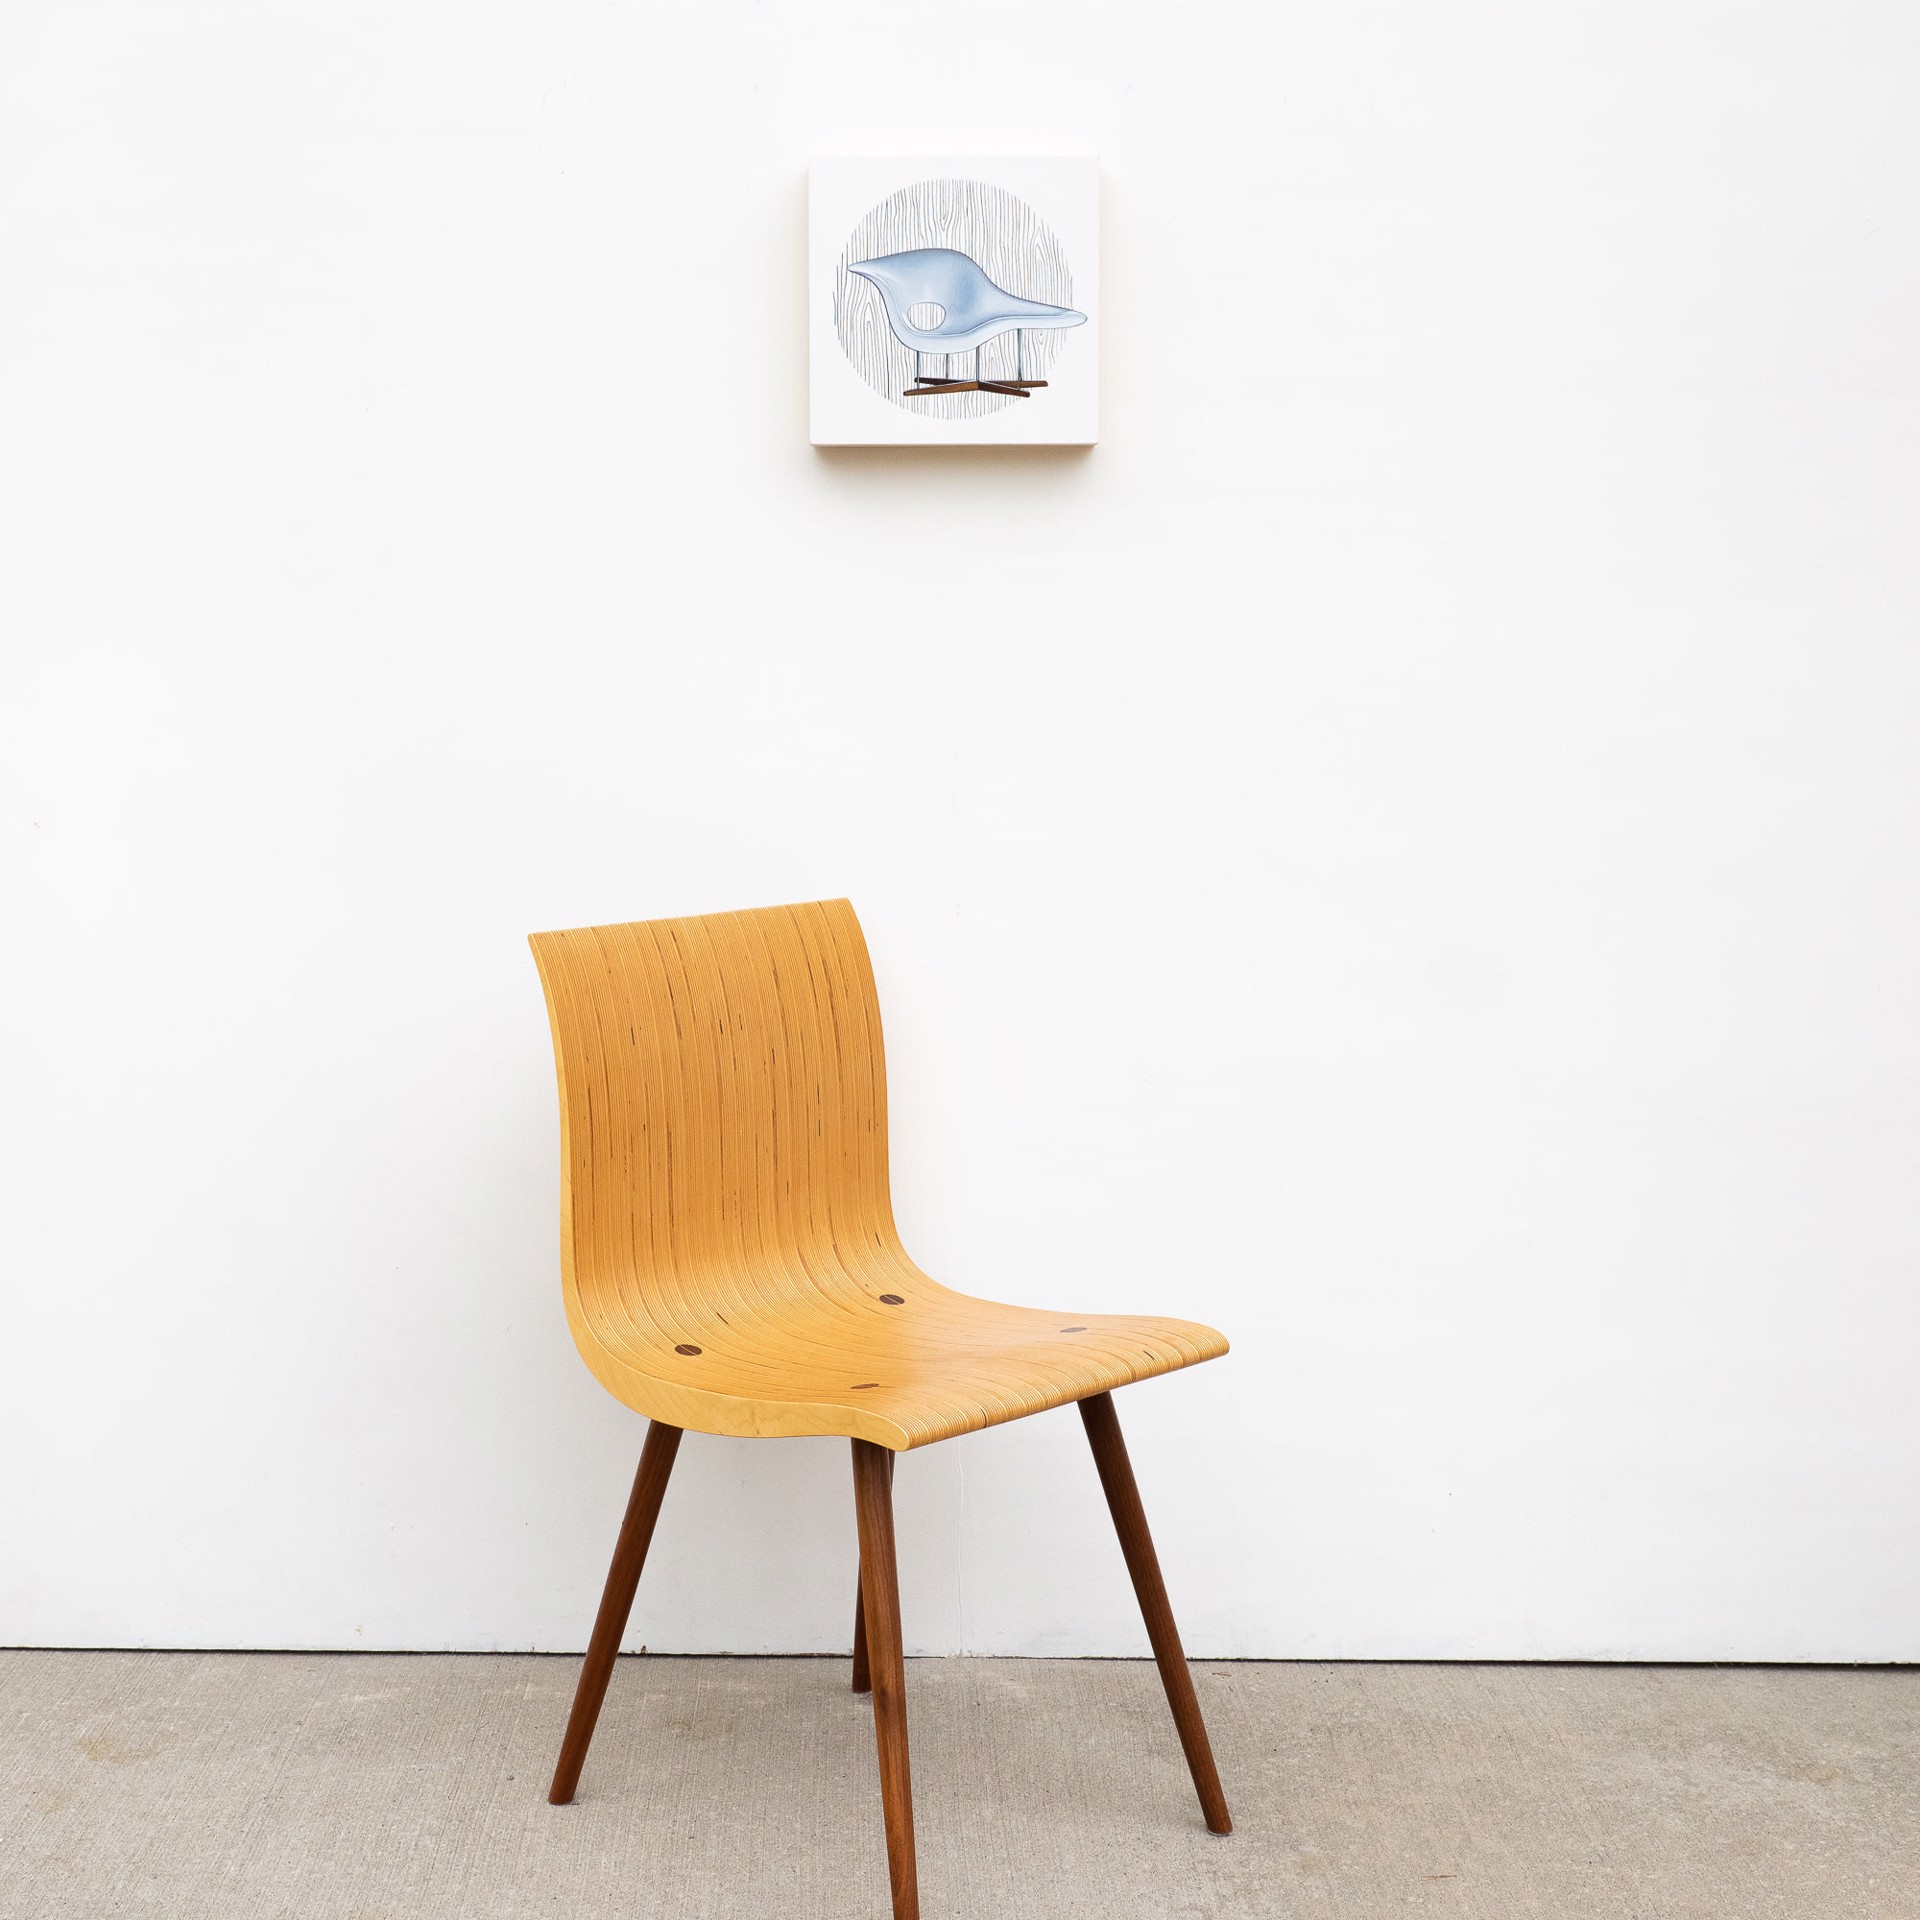 La Chaise by Mara Minuzzo